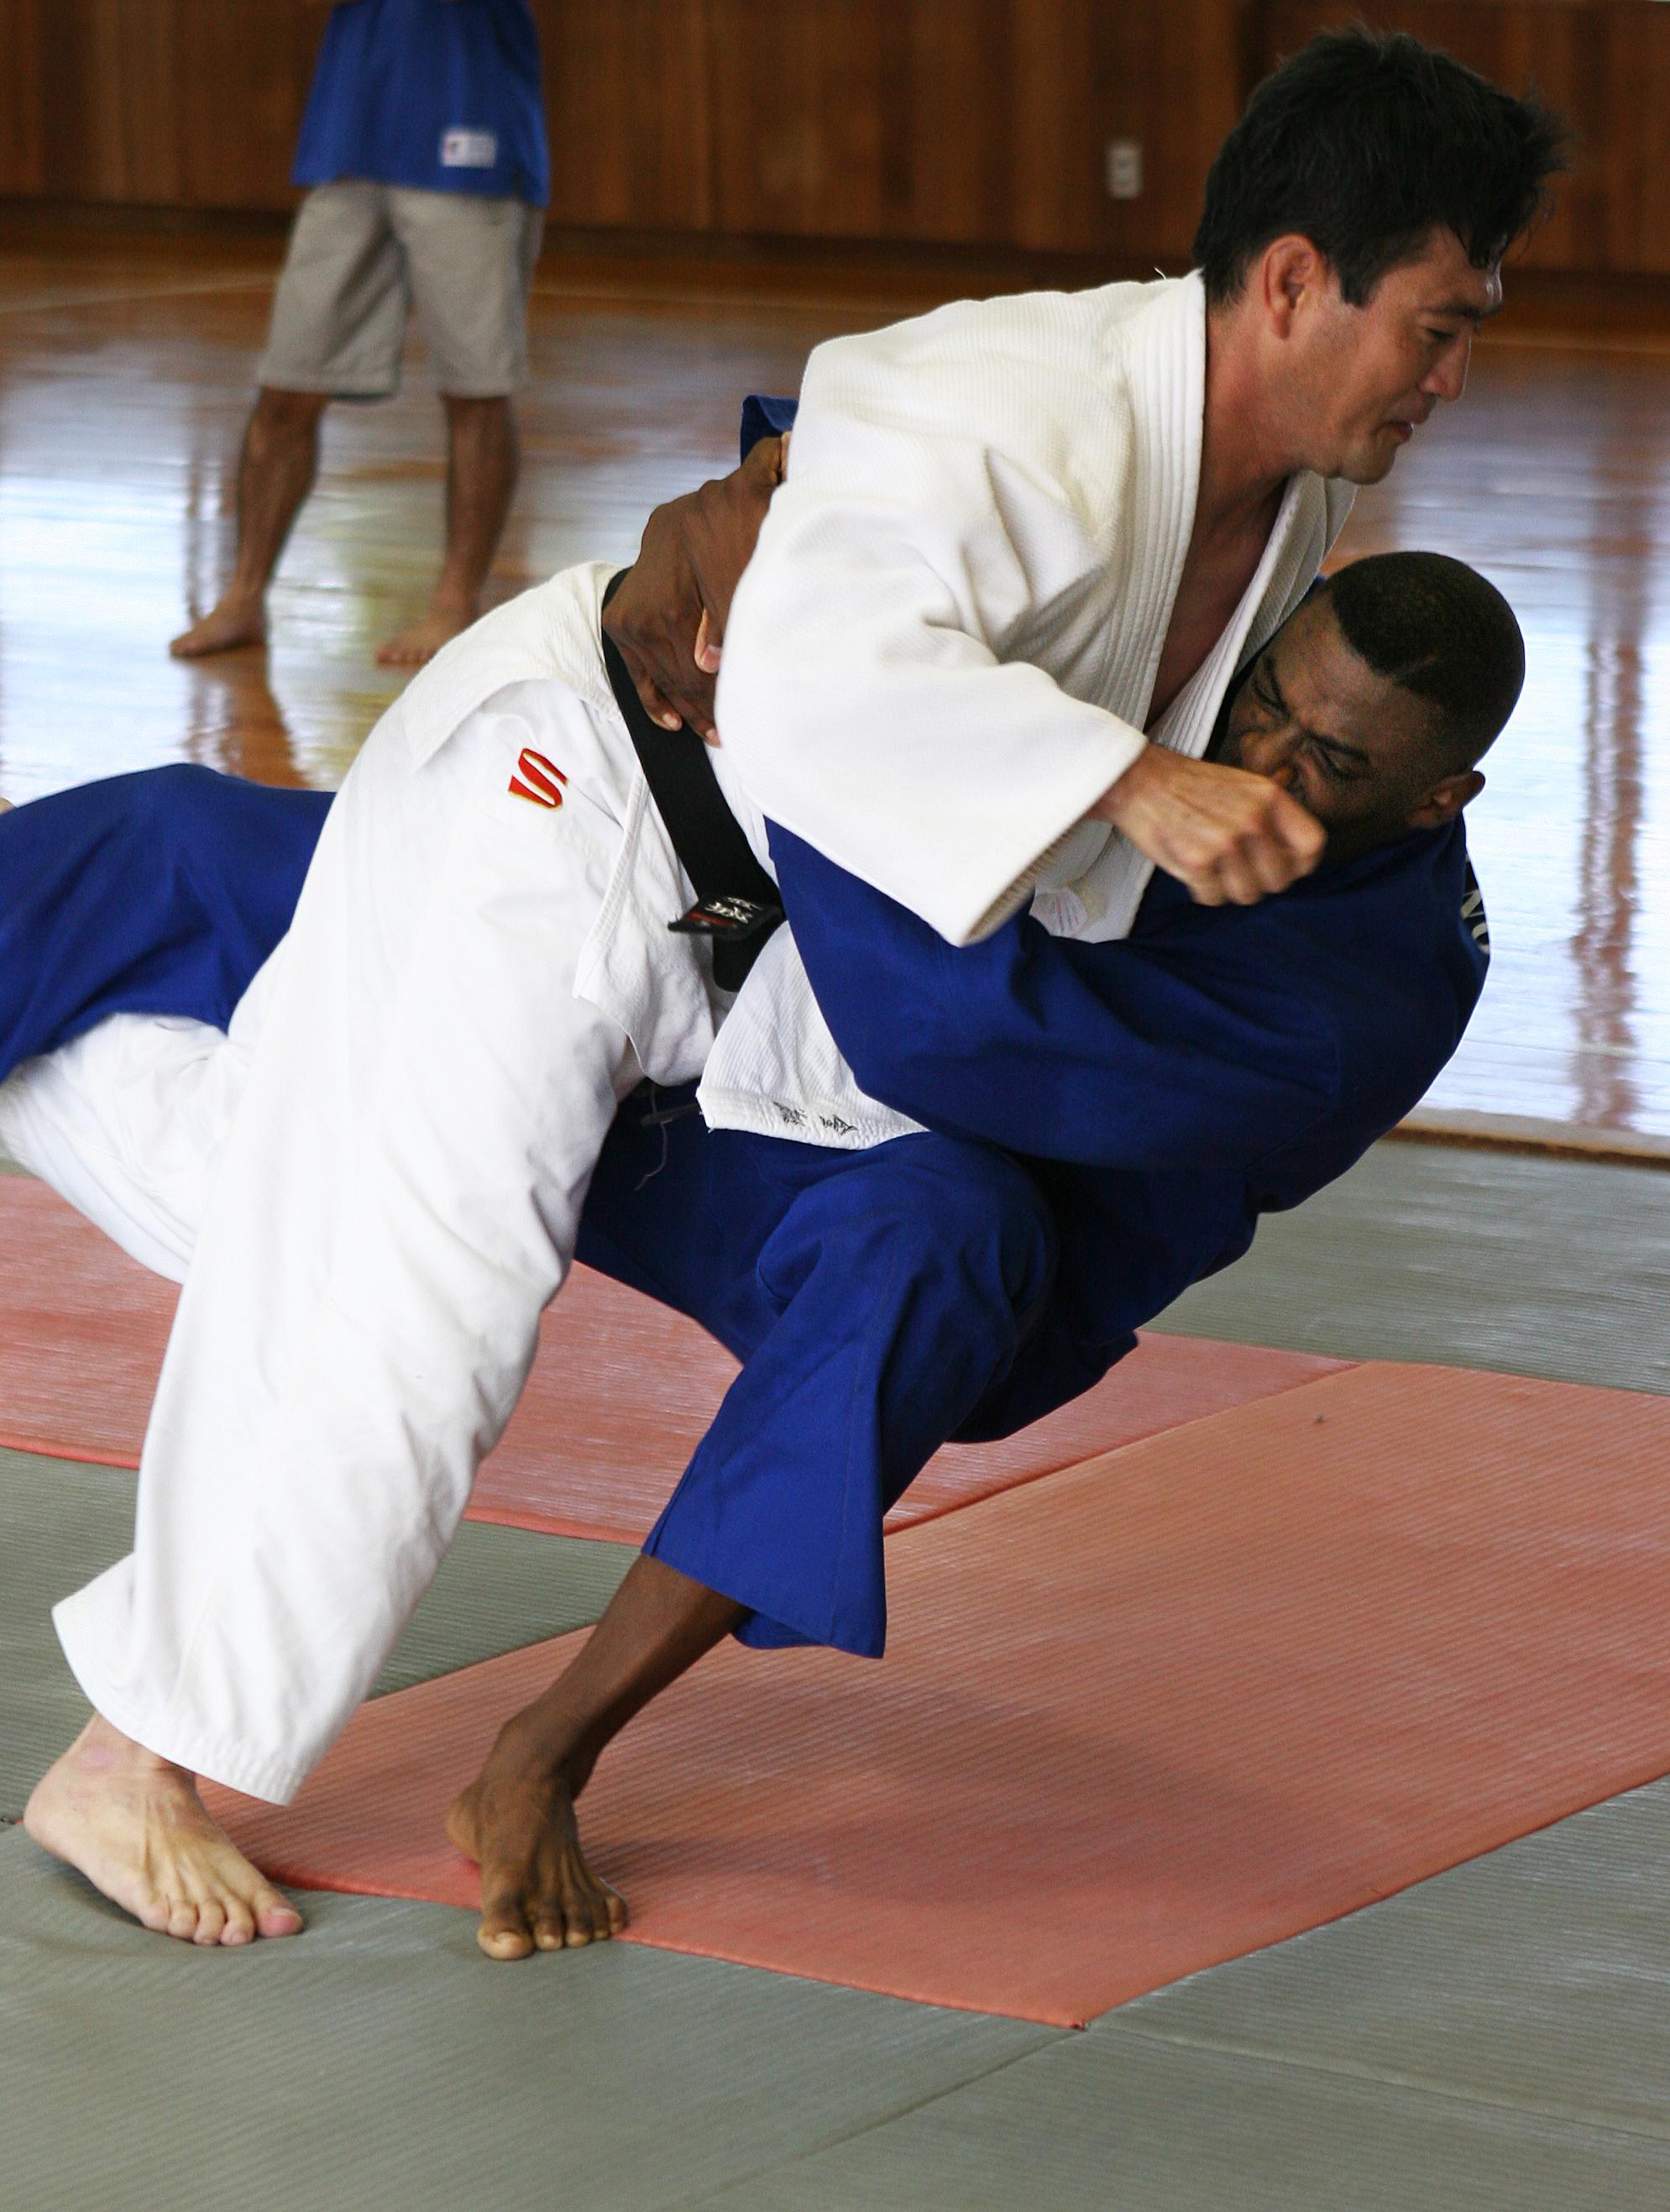 File:050907-M-7747B-002-Judo.jpg - Wikipedia